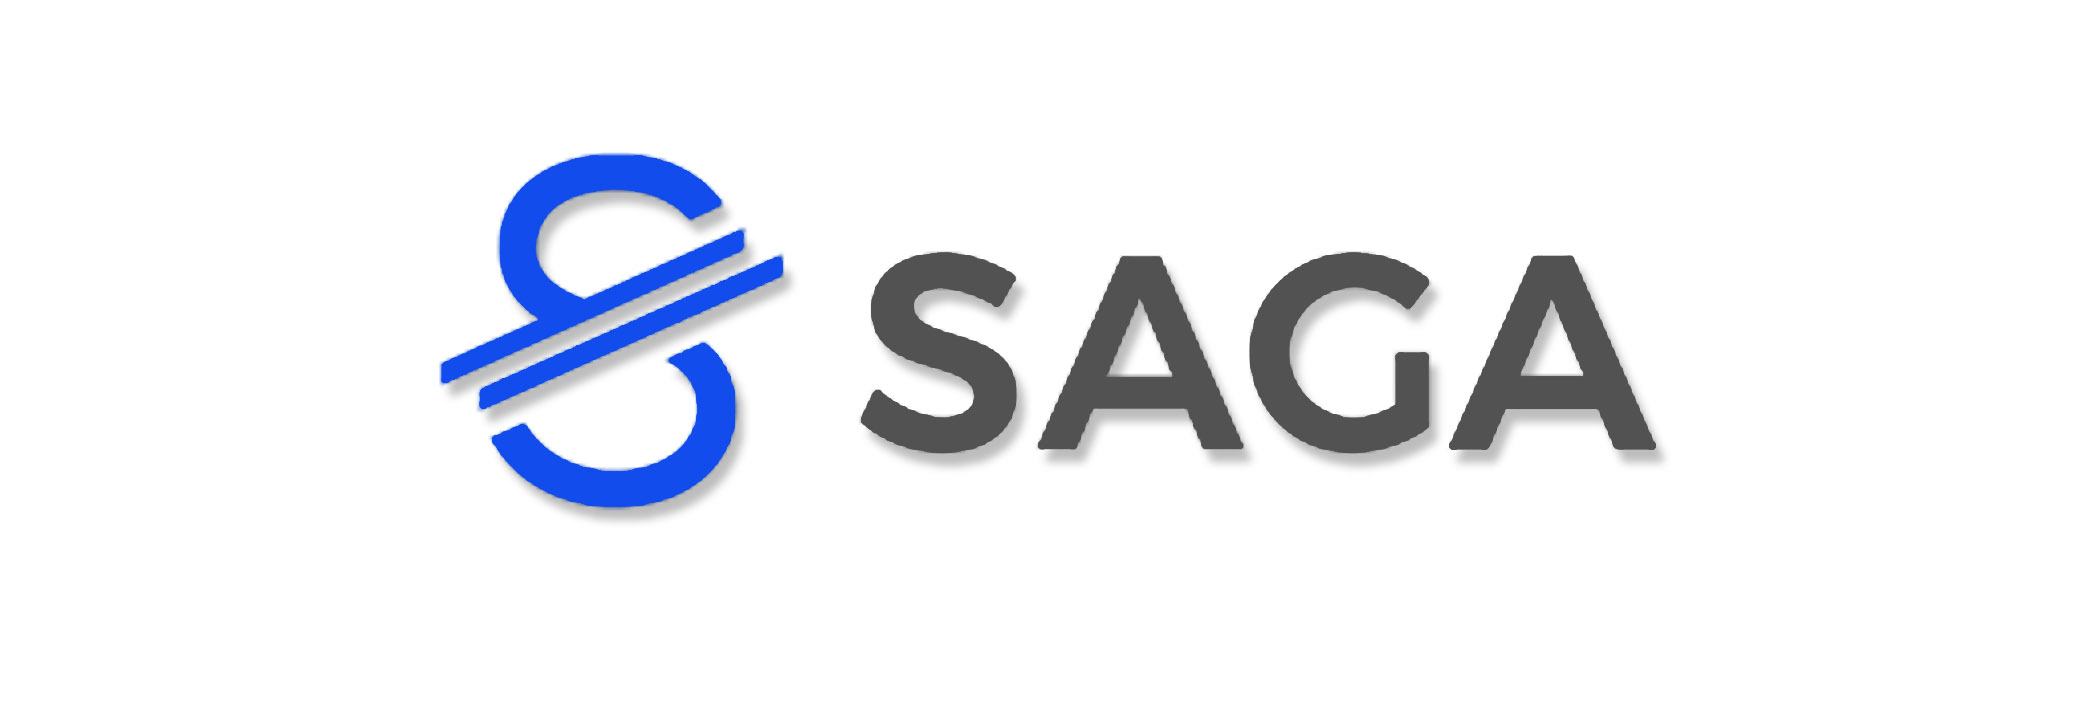 ساگا SAGA